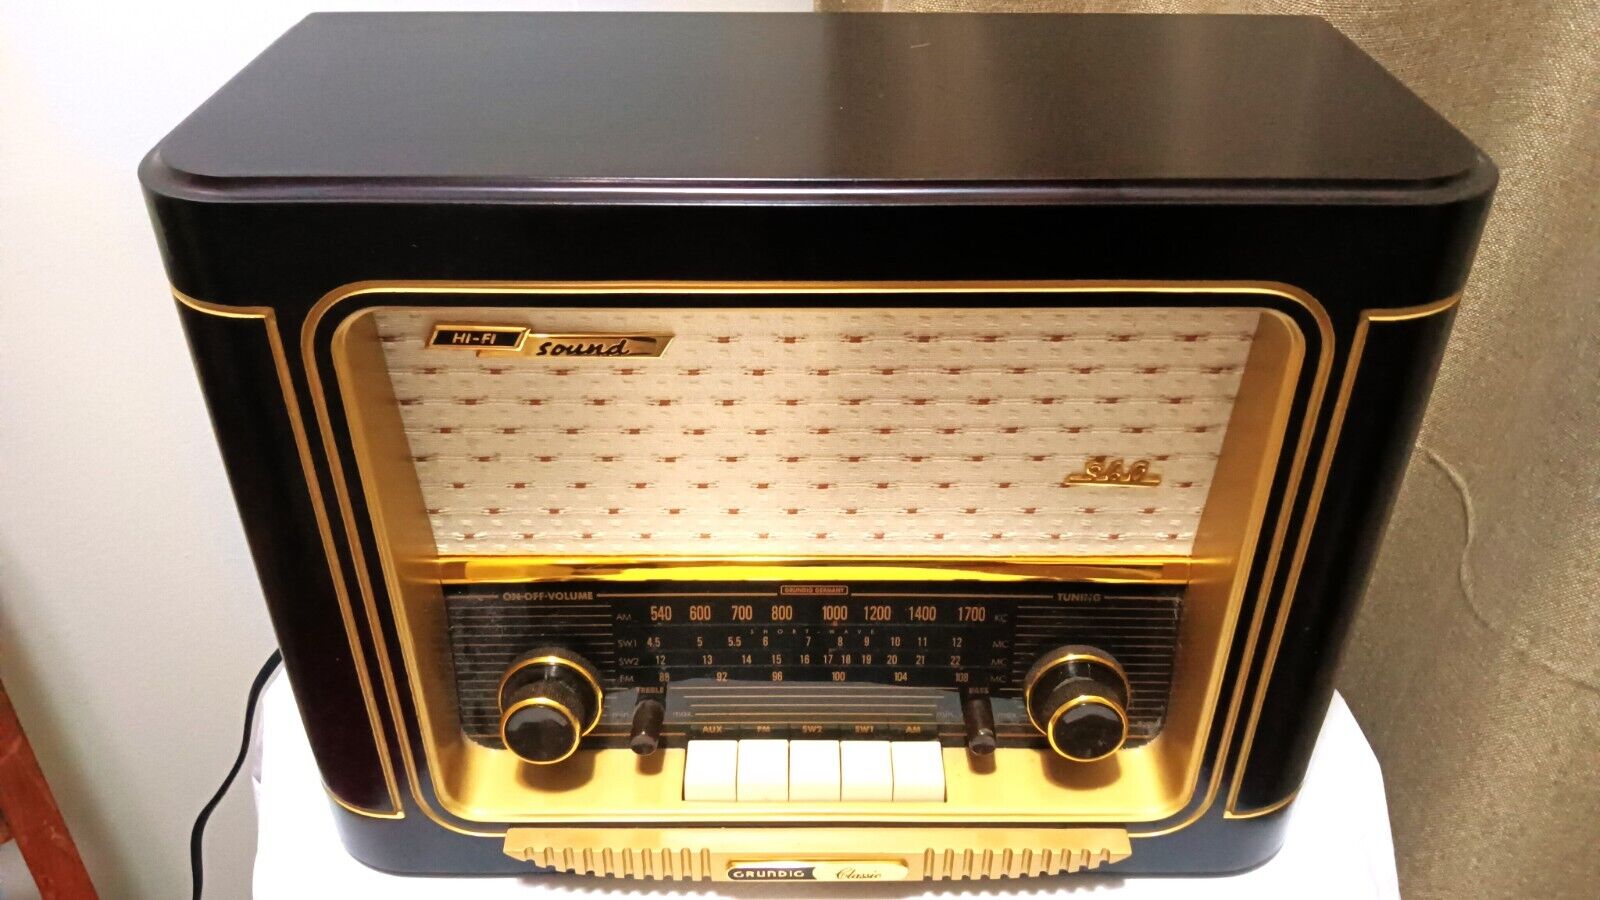 GRUNDIG CLASSIC RADIO 960 ANNIVERSARY EDITION AM FM AUDIO BLUETOOTH WORKING EXC